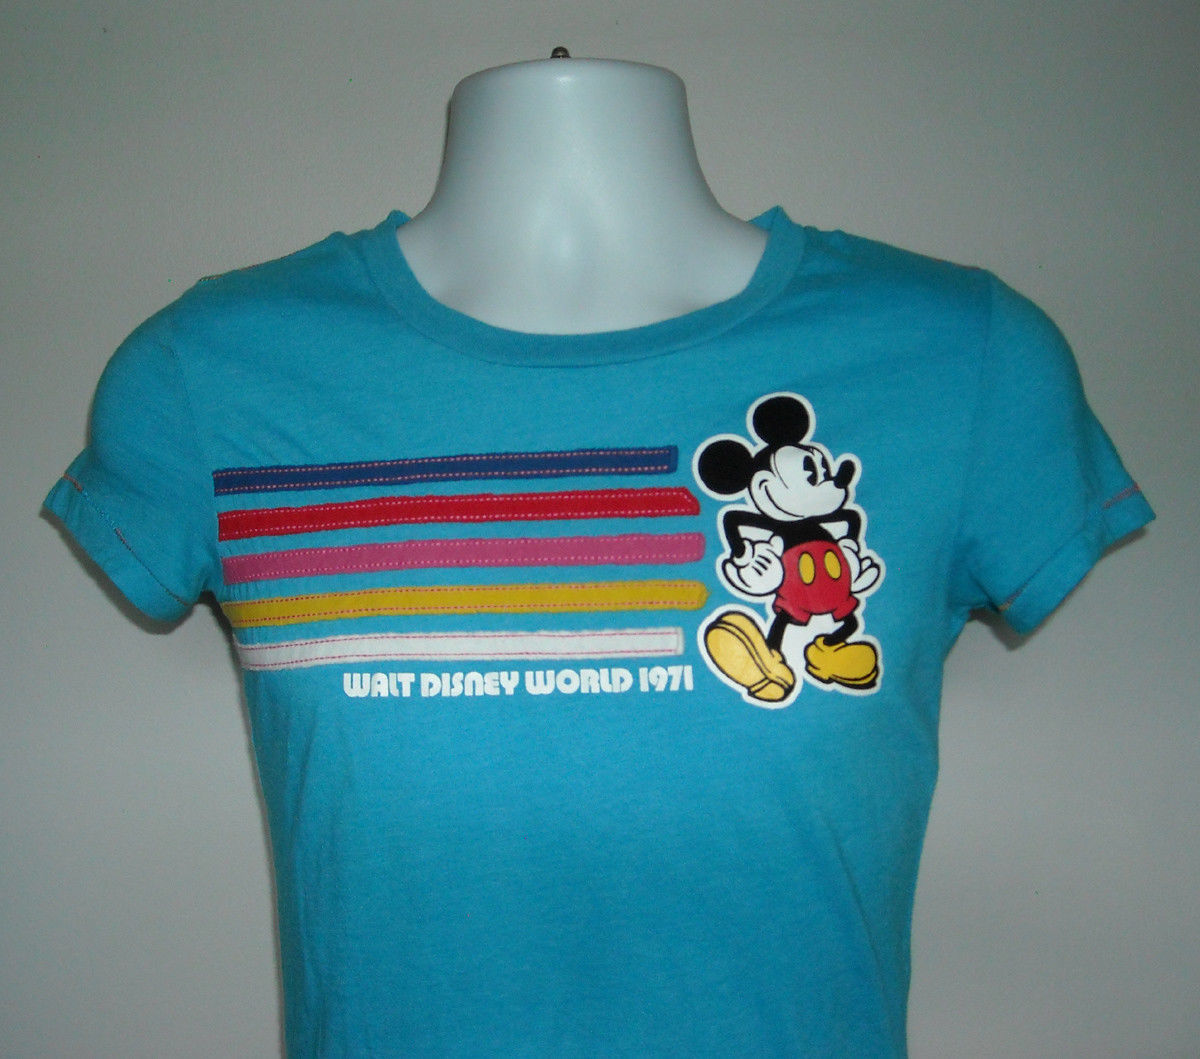 Womens Juniors Walt Disney World 1971 t shirt XSmall turquoise Mickey Mouse - $21.73